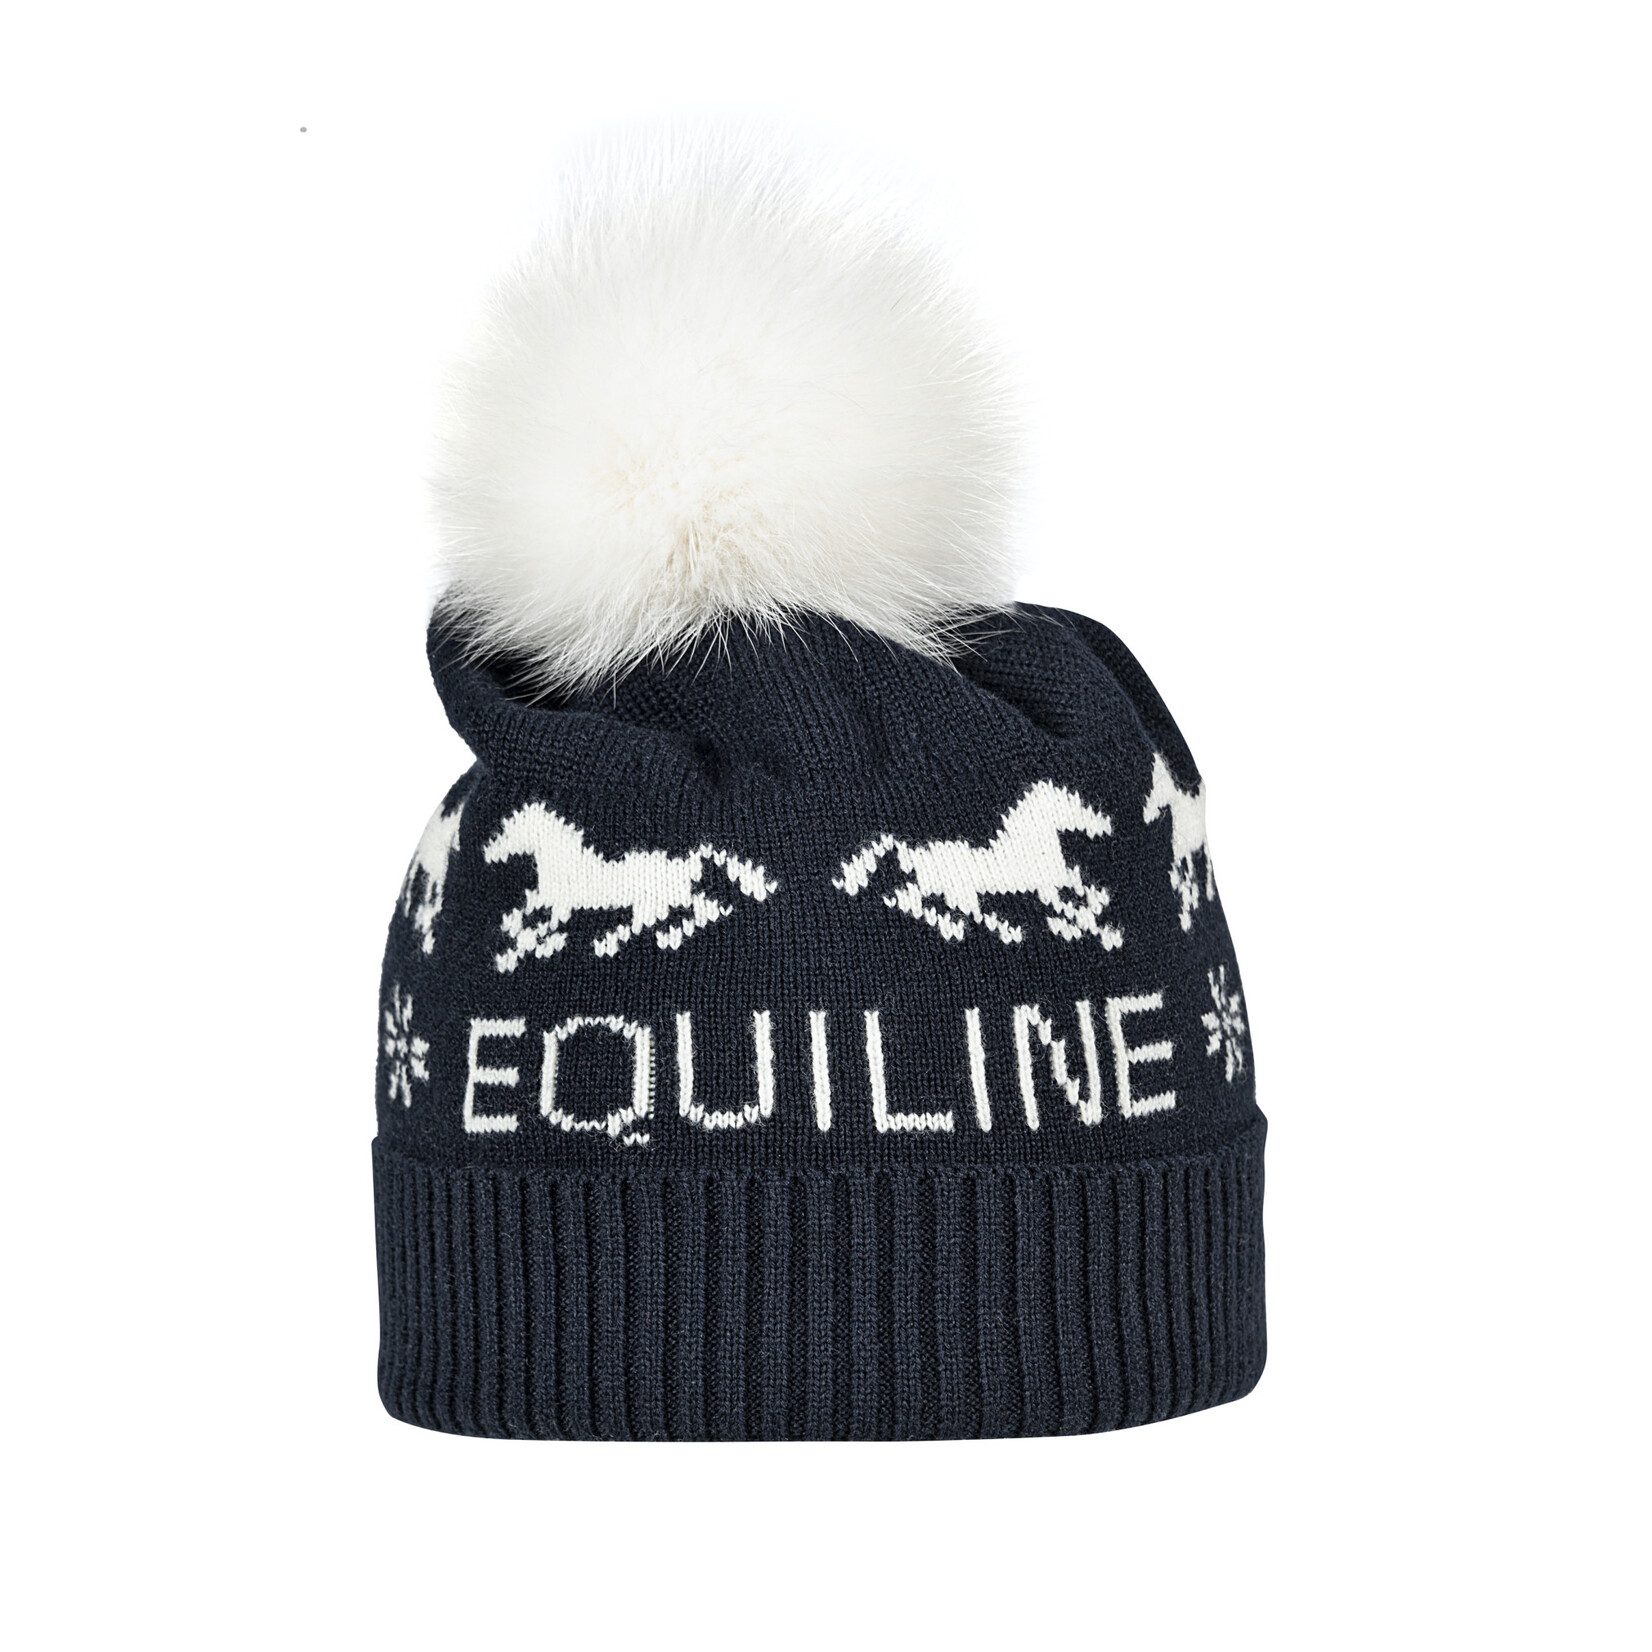 Equiline Equiline Comet Knit Winter Hat